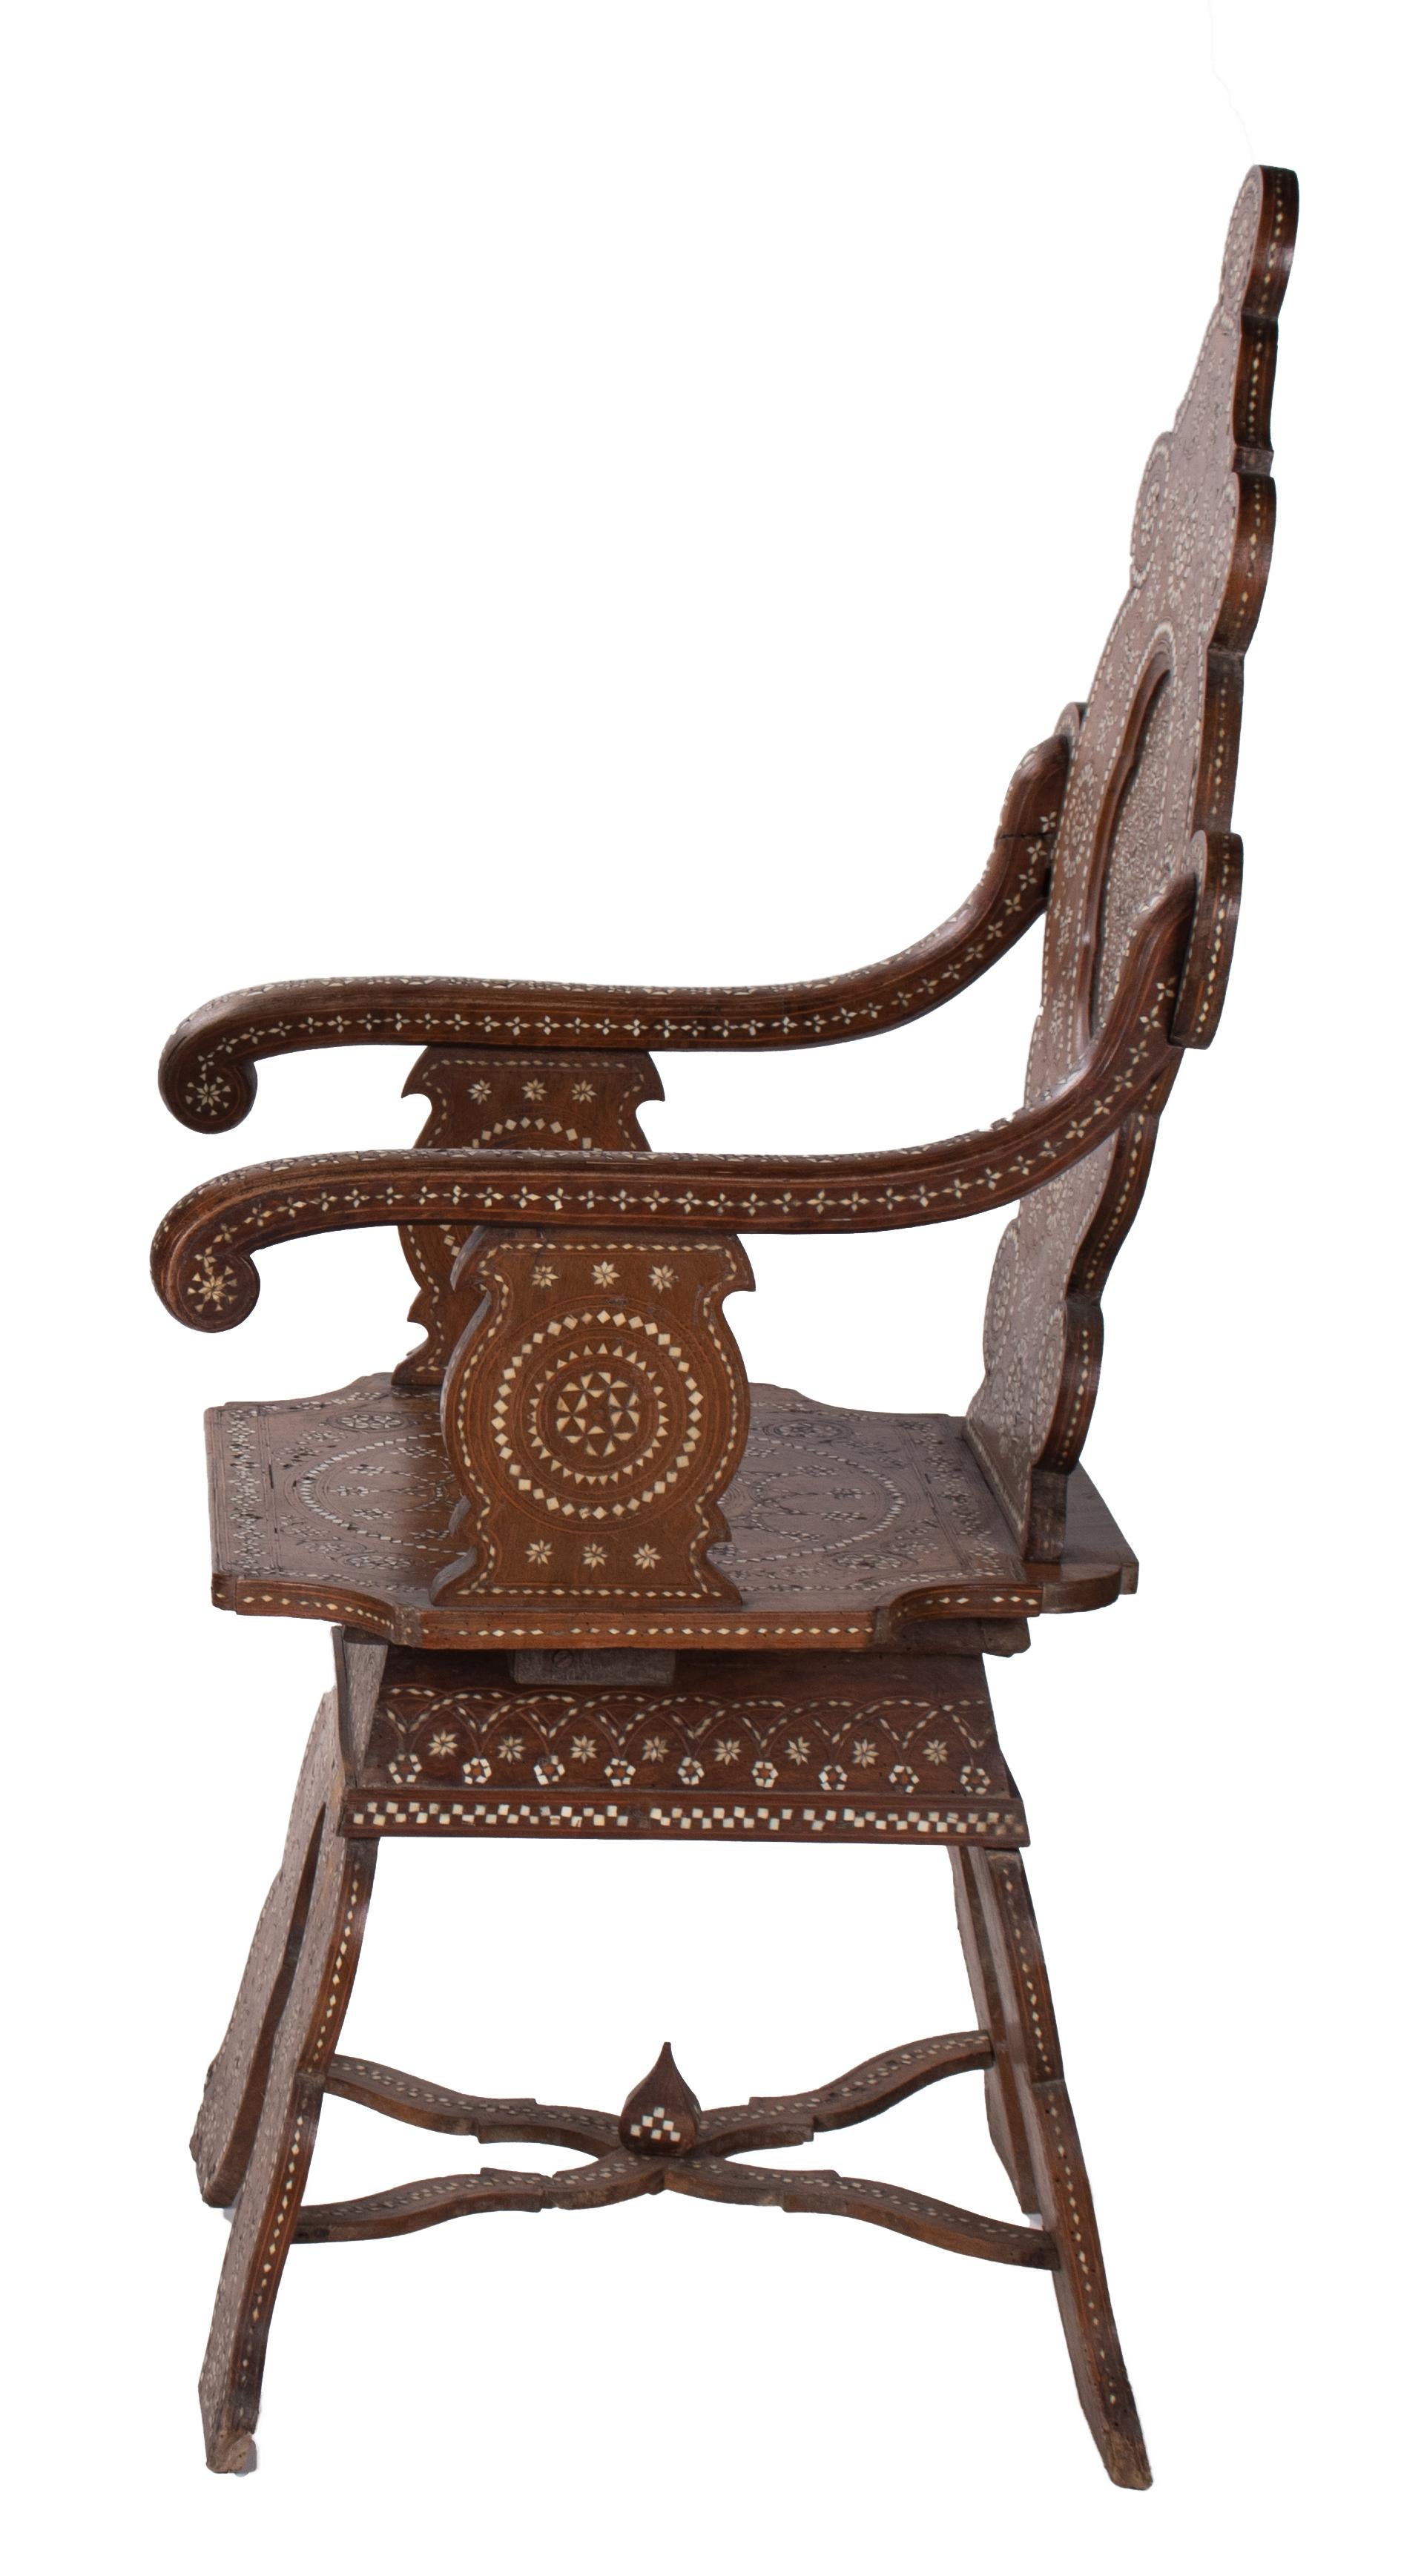 19th century Italian hand carved inlaid armchair.